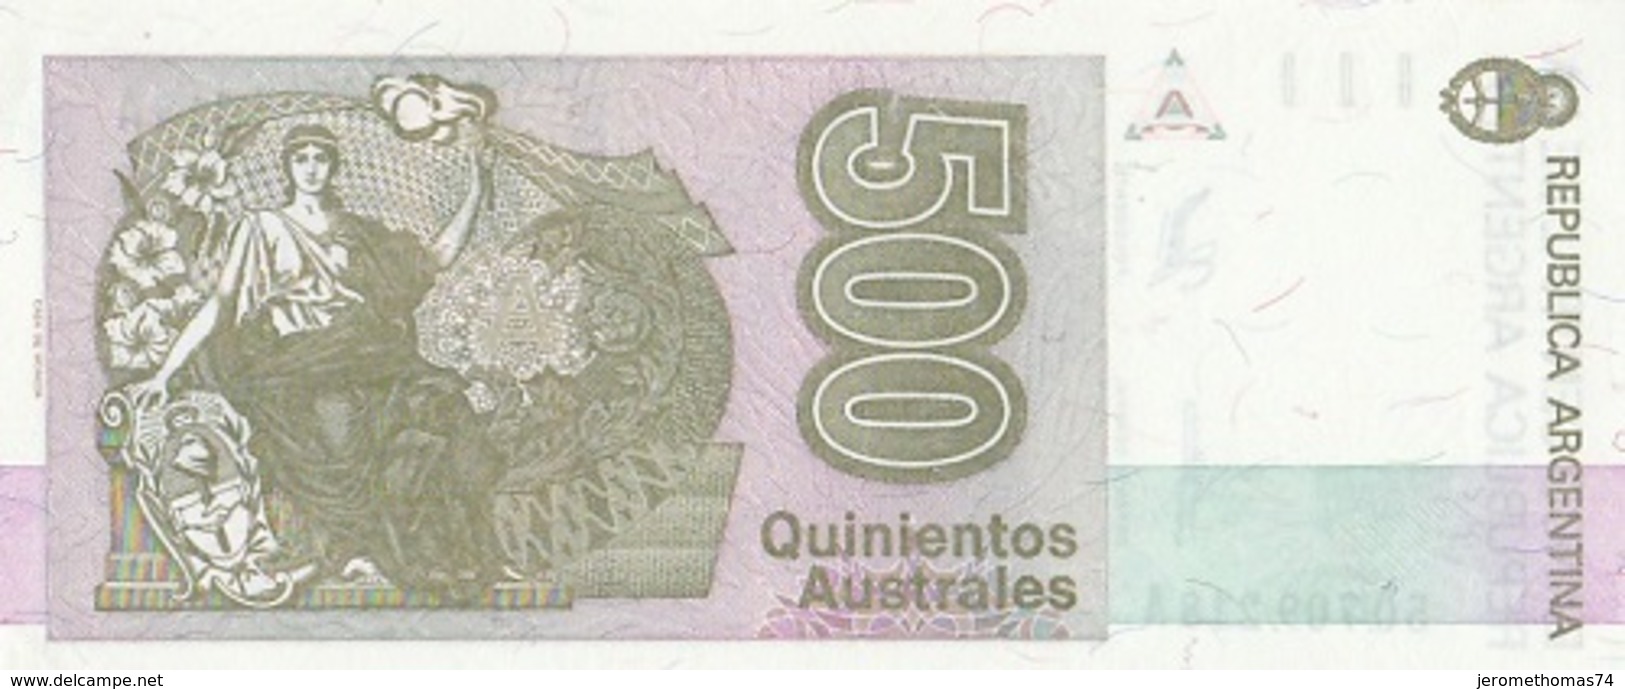 Billet 500 Australes De L'argentine - Argentine